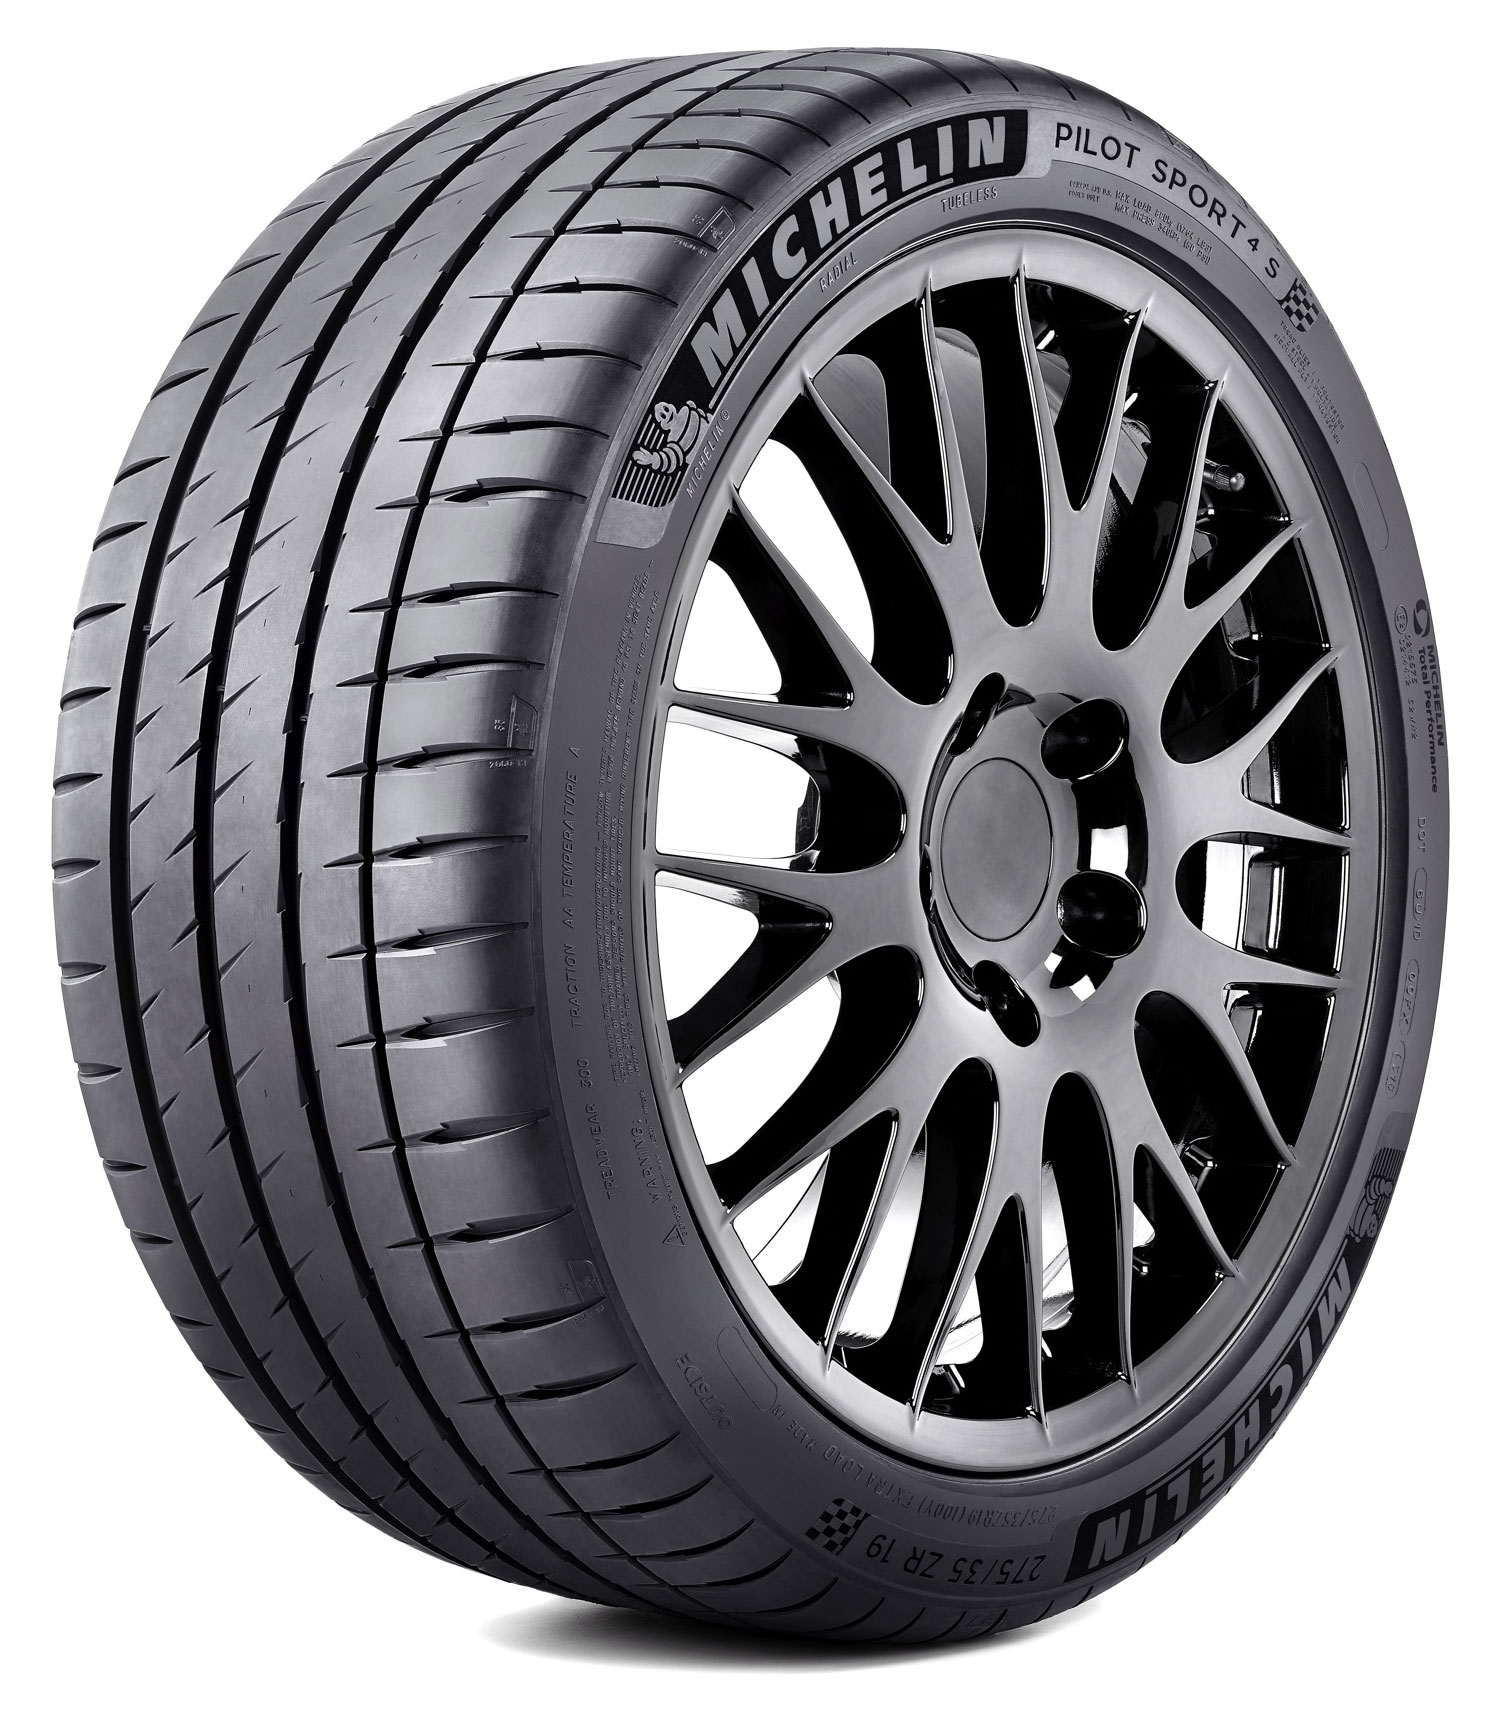 Gomme Nuove Michelin 215/40 R17 87Y Pilotsport4 XL pneumatici nuovi Estivo